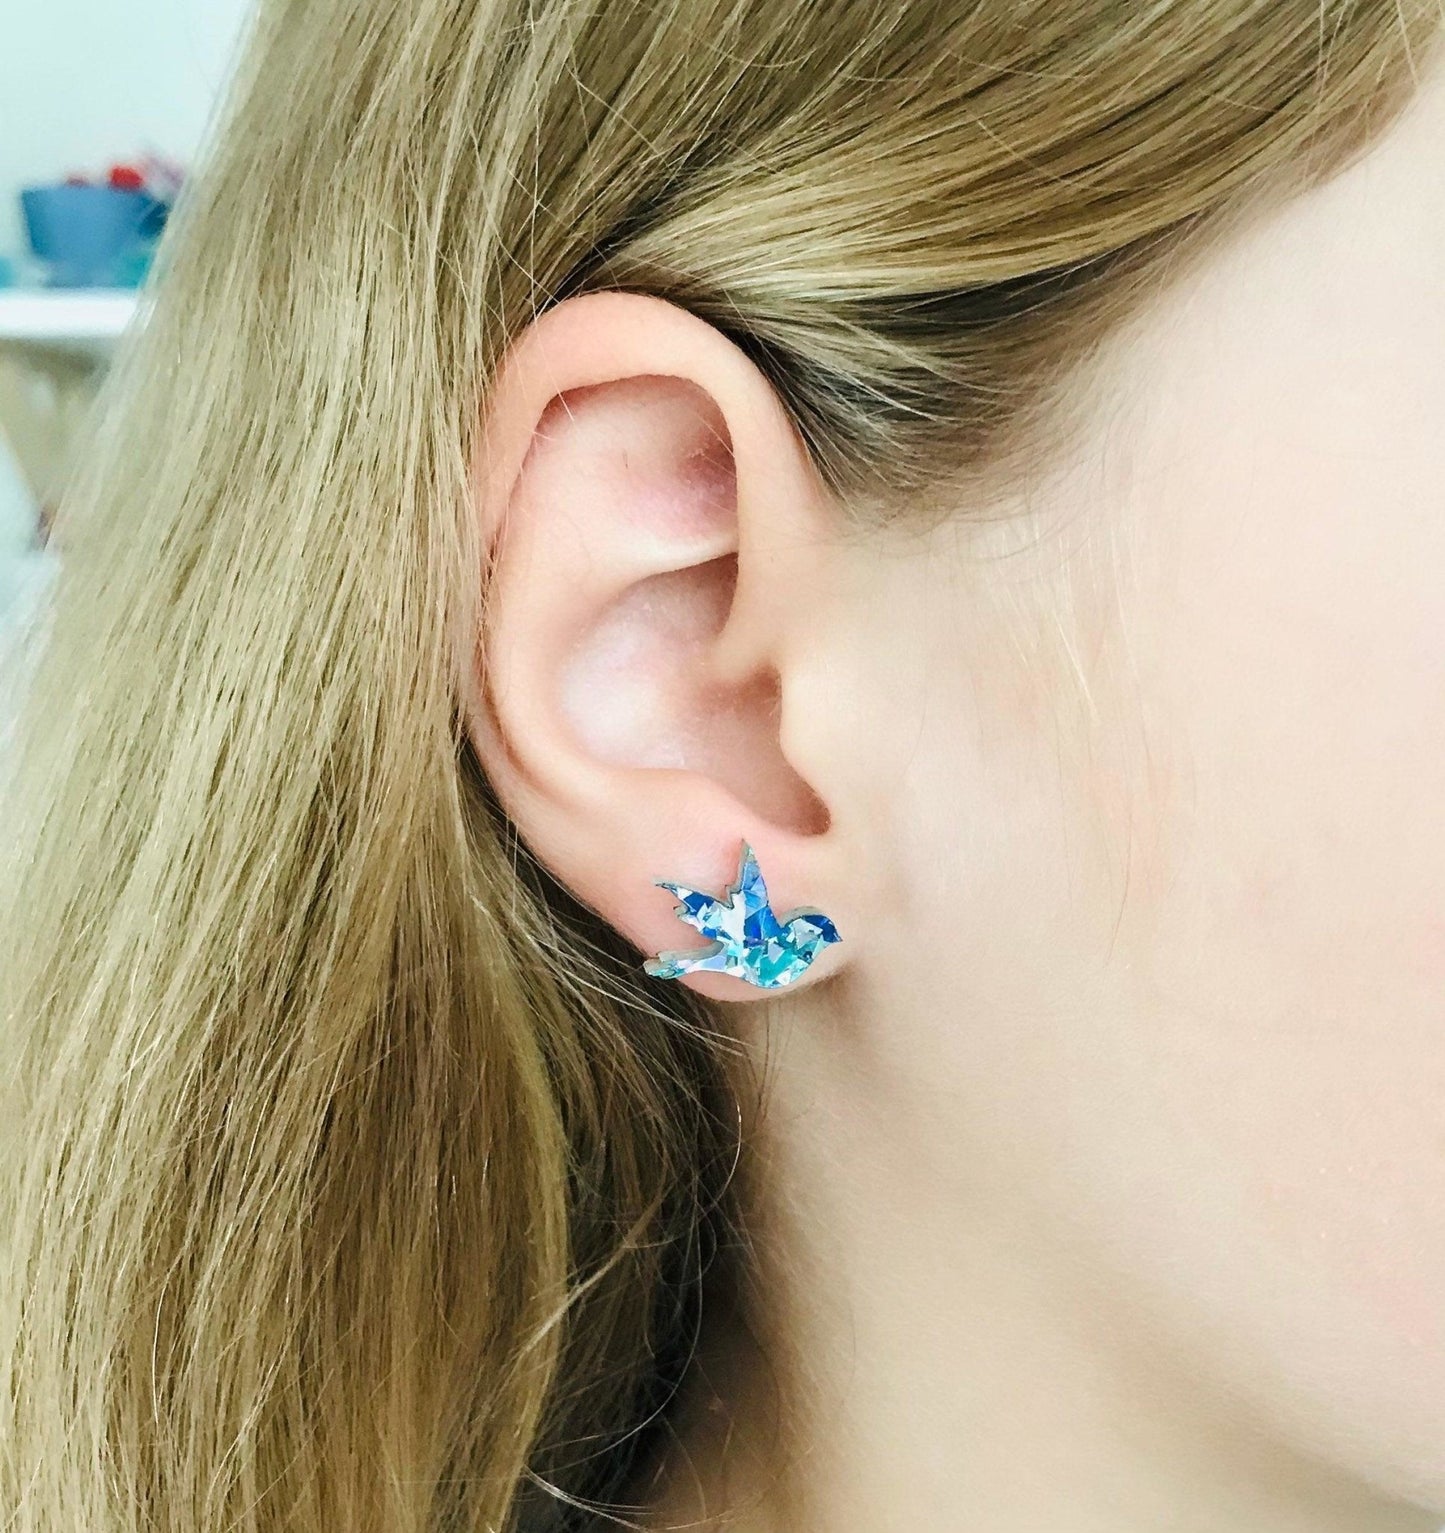 Bluebird earring set - Ice Blue Glitter - Lacey Lou Sparkles